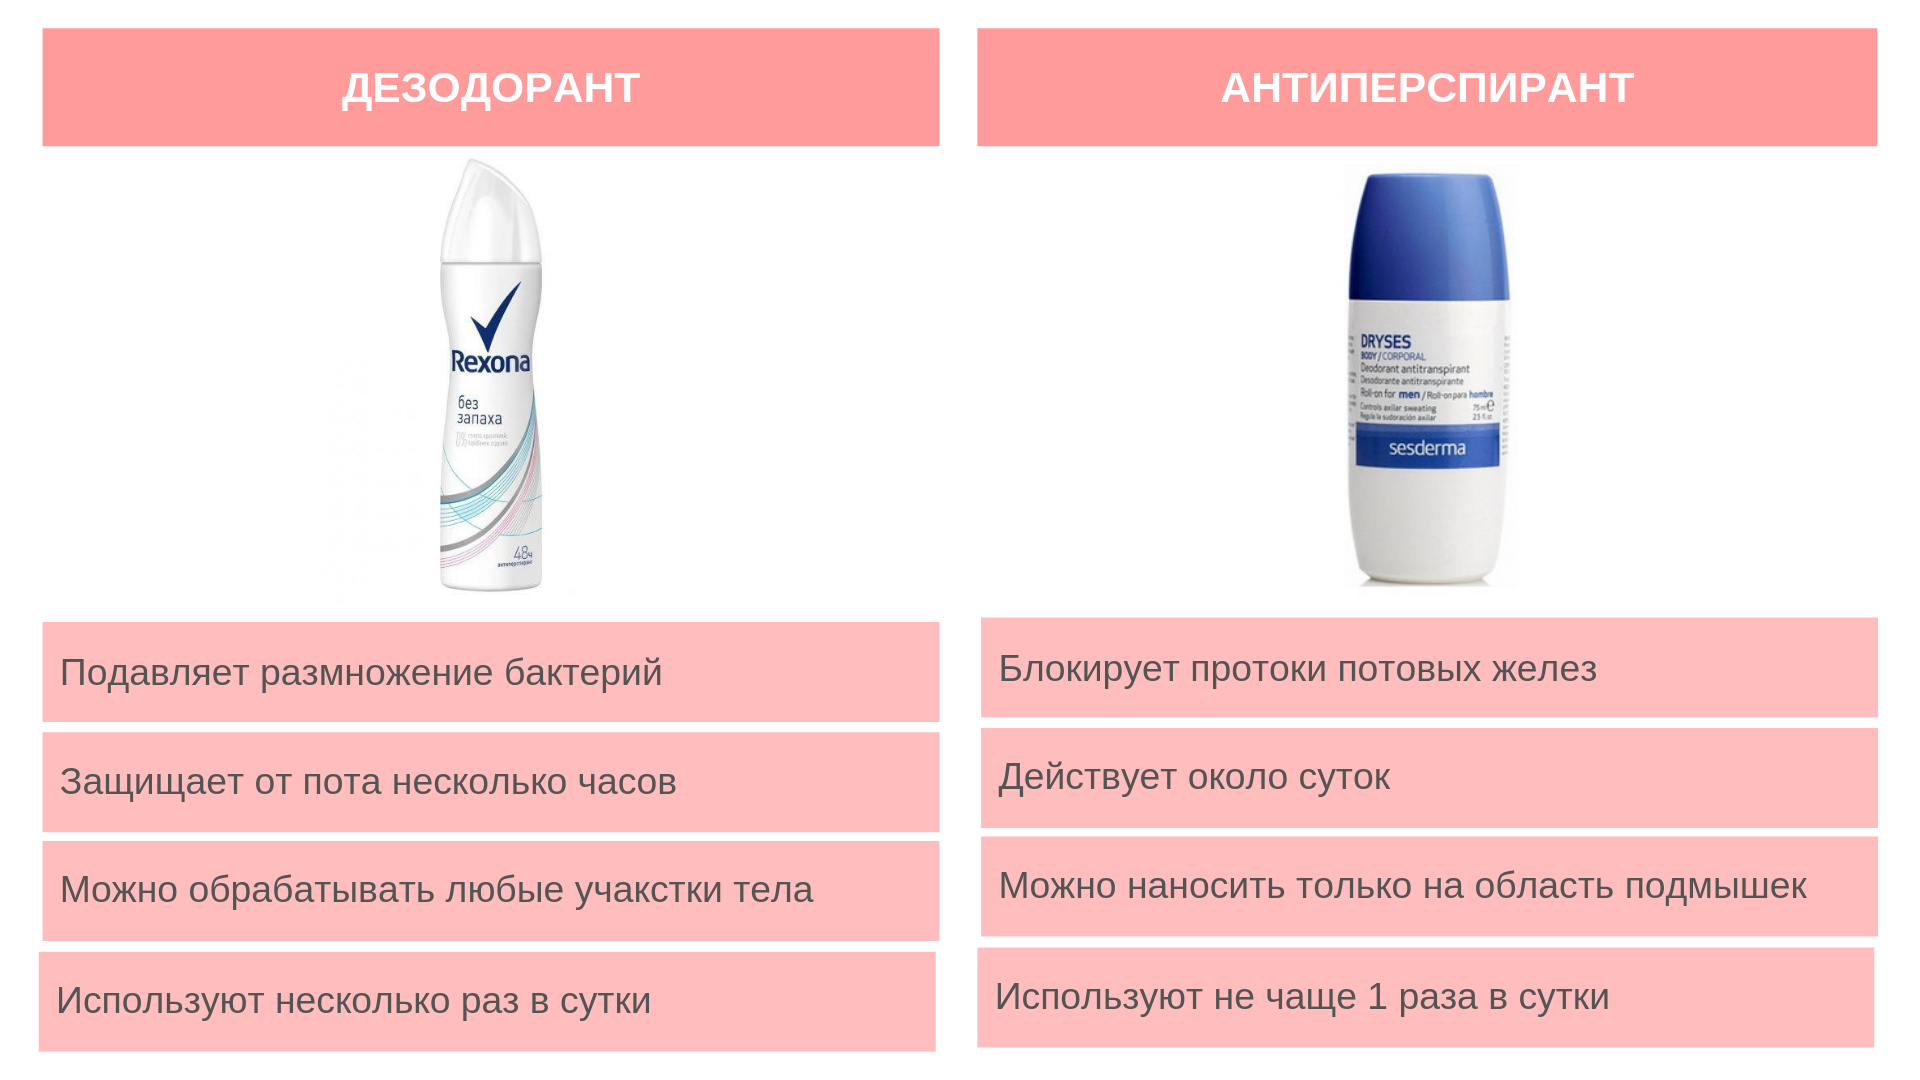 Какие антиперспиранты. Дезодорант и антиперспирант отличия и разница. Дезодорант и антиперспирант отличия. Разница между дезодорантом и антиперспирантом. Различие дезодоранта и антиперспиранта.